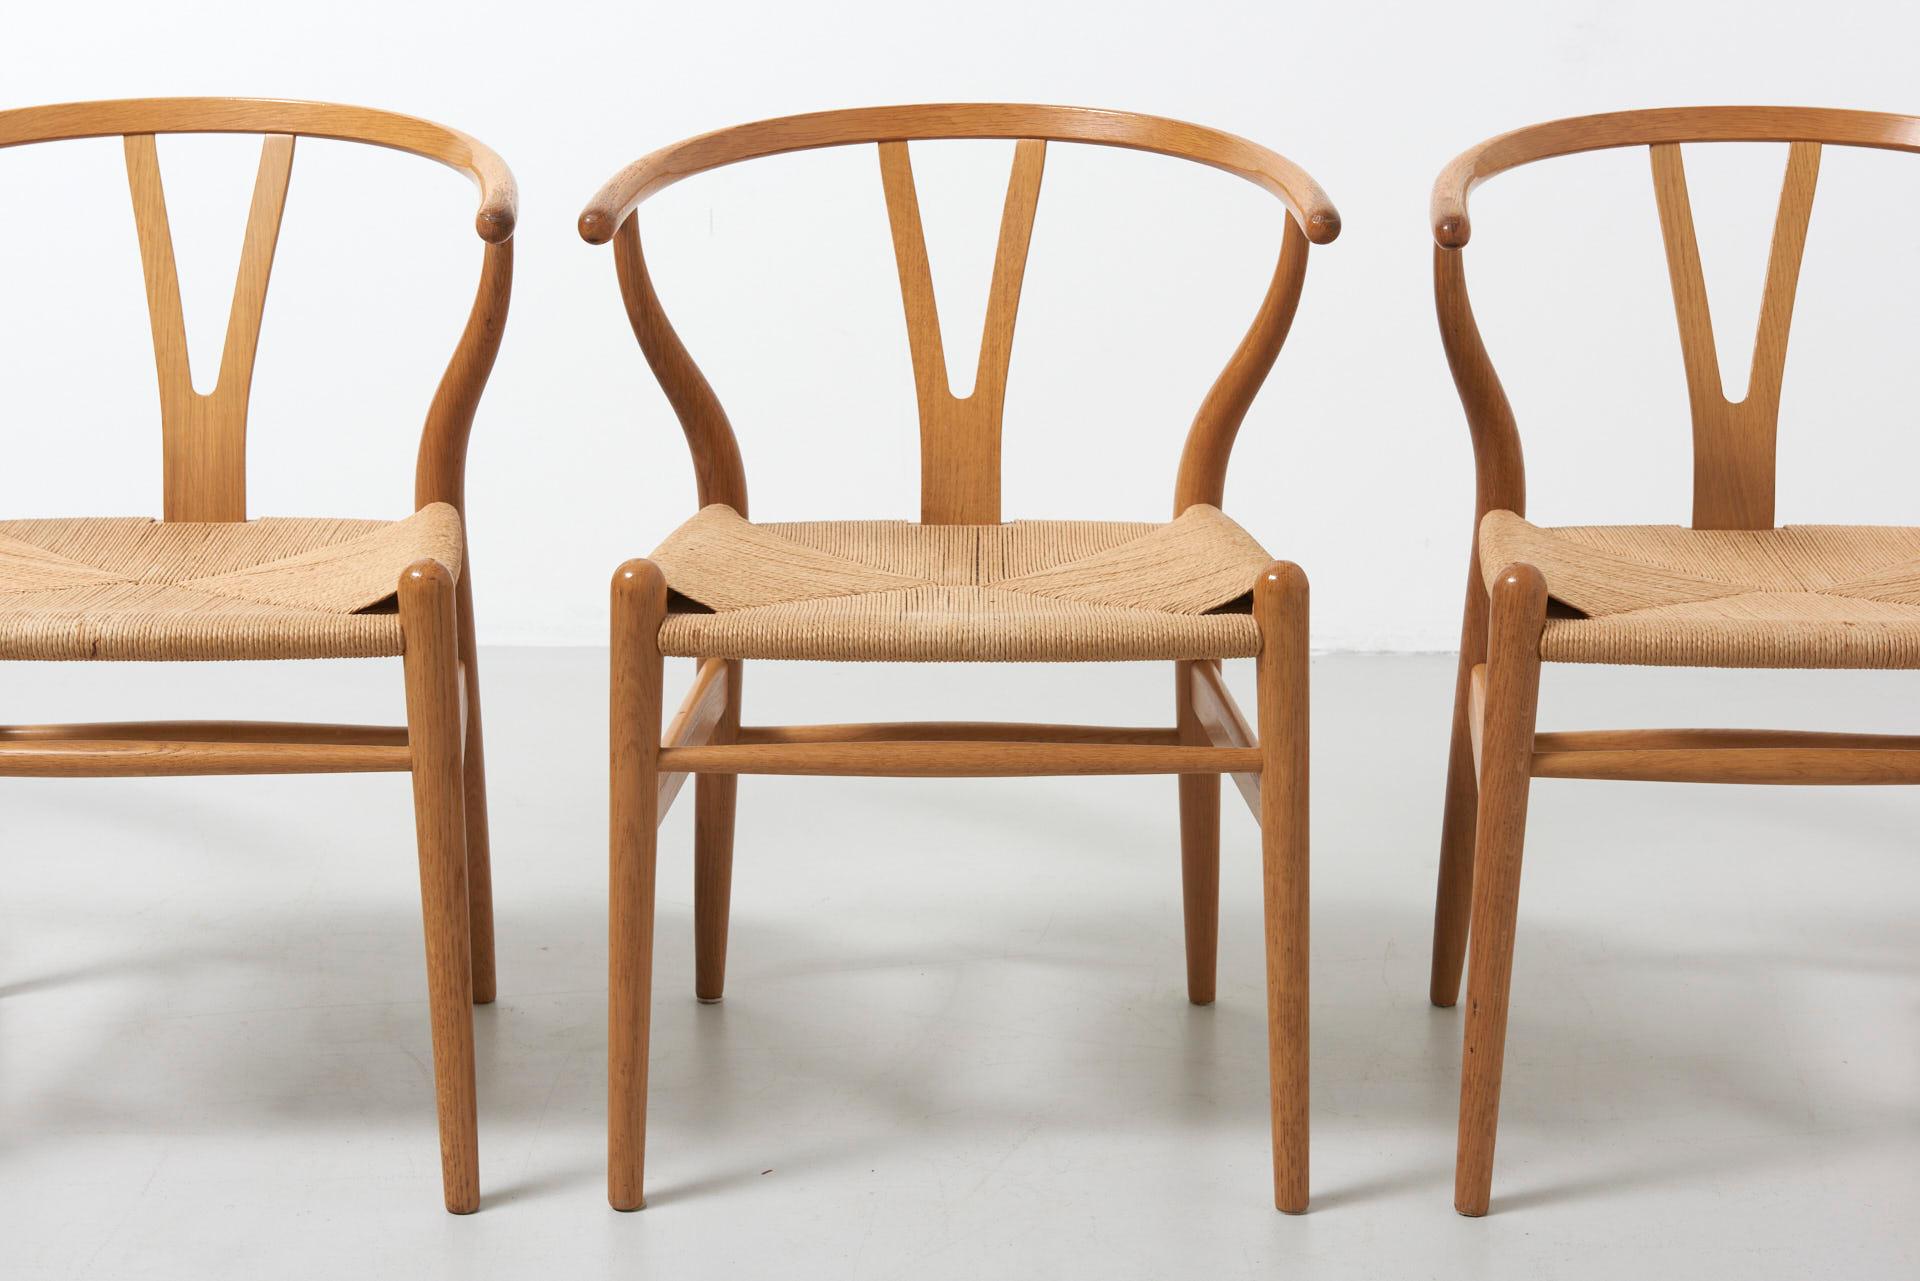 20th Century 4 'Wishbone' Chairs in Oak Ch24 by Hans Wegner for Carl Hansen